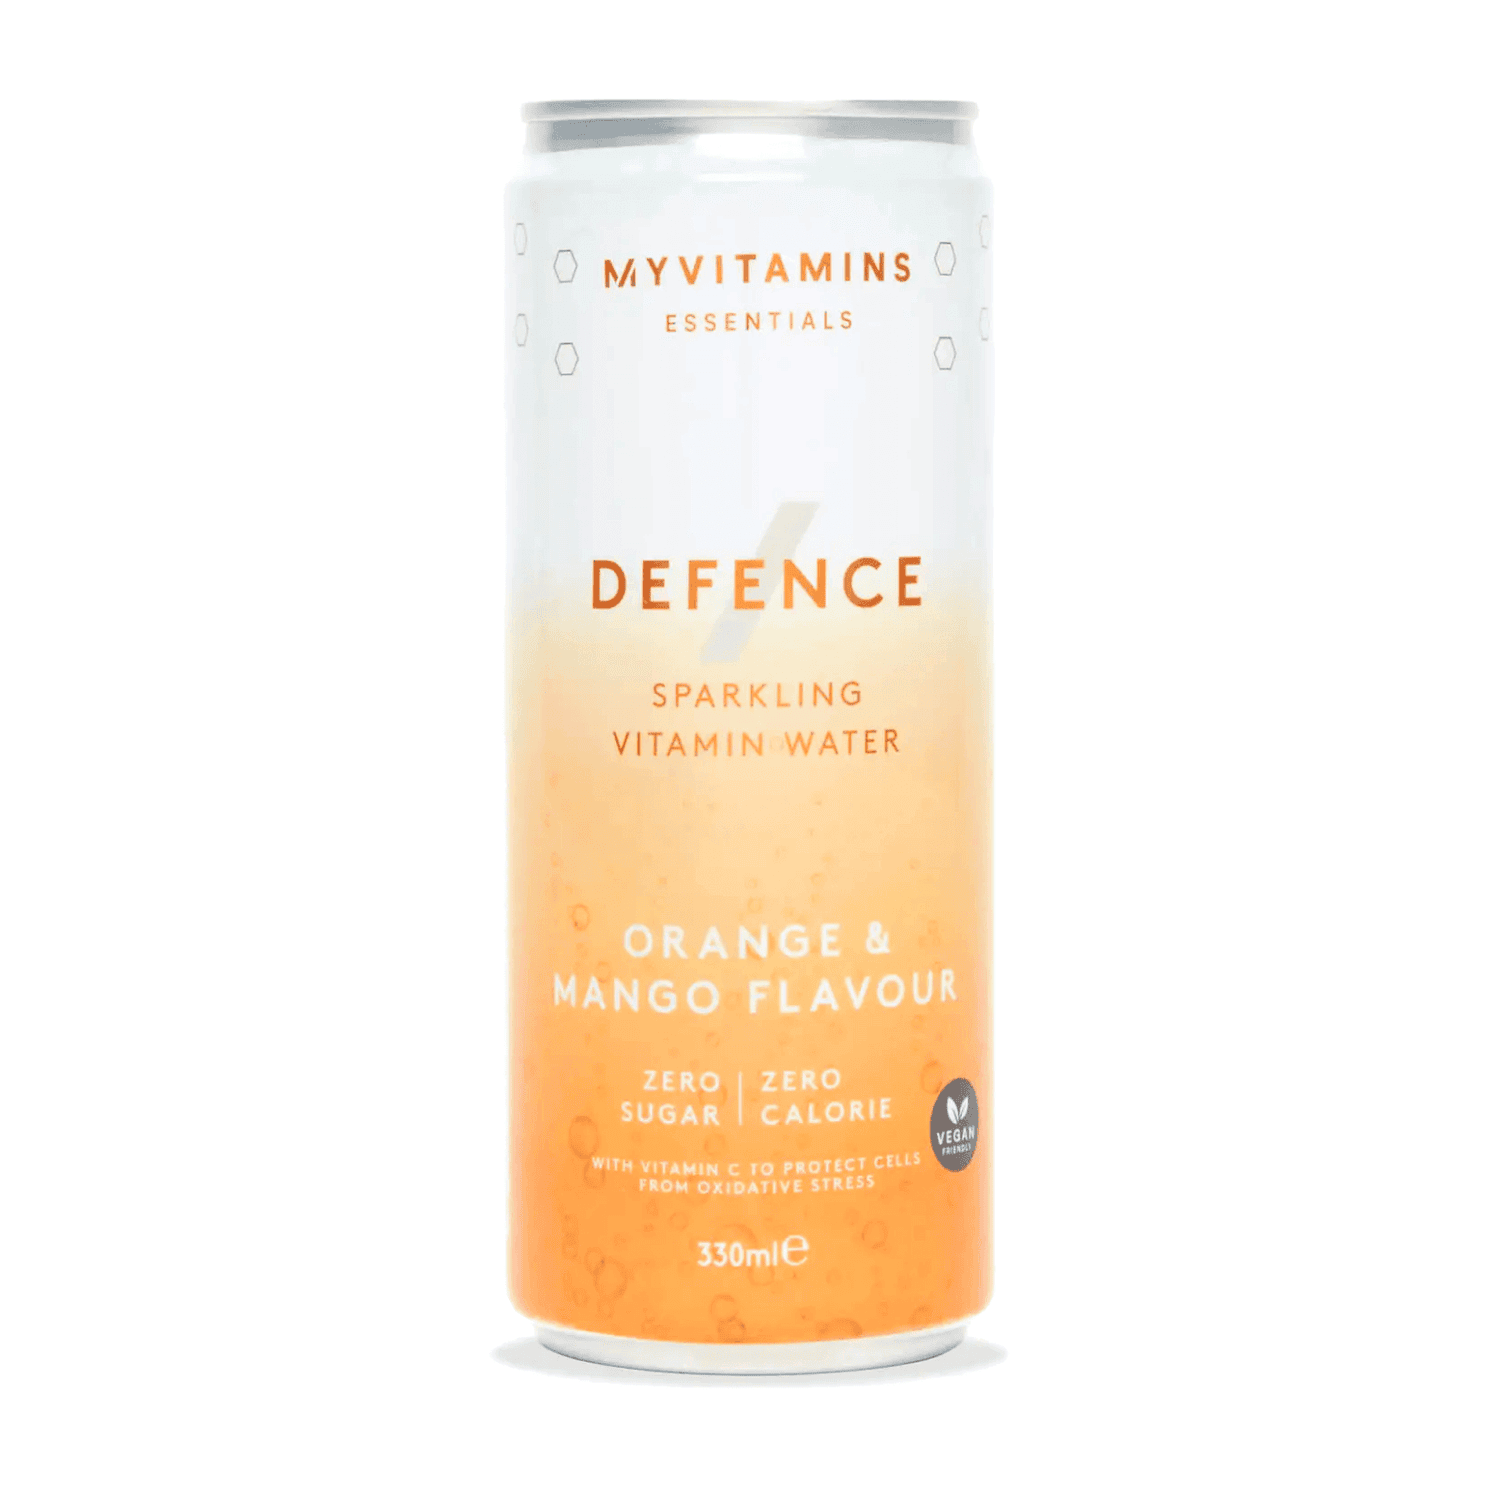 Defence Sparkling Vitamin Water (Sample) - Orange and Mango